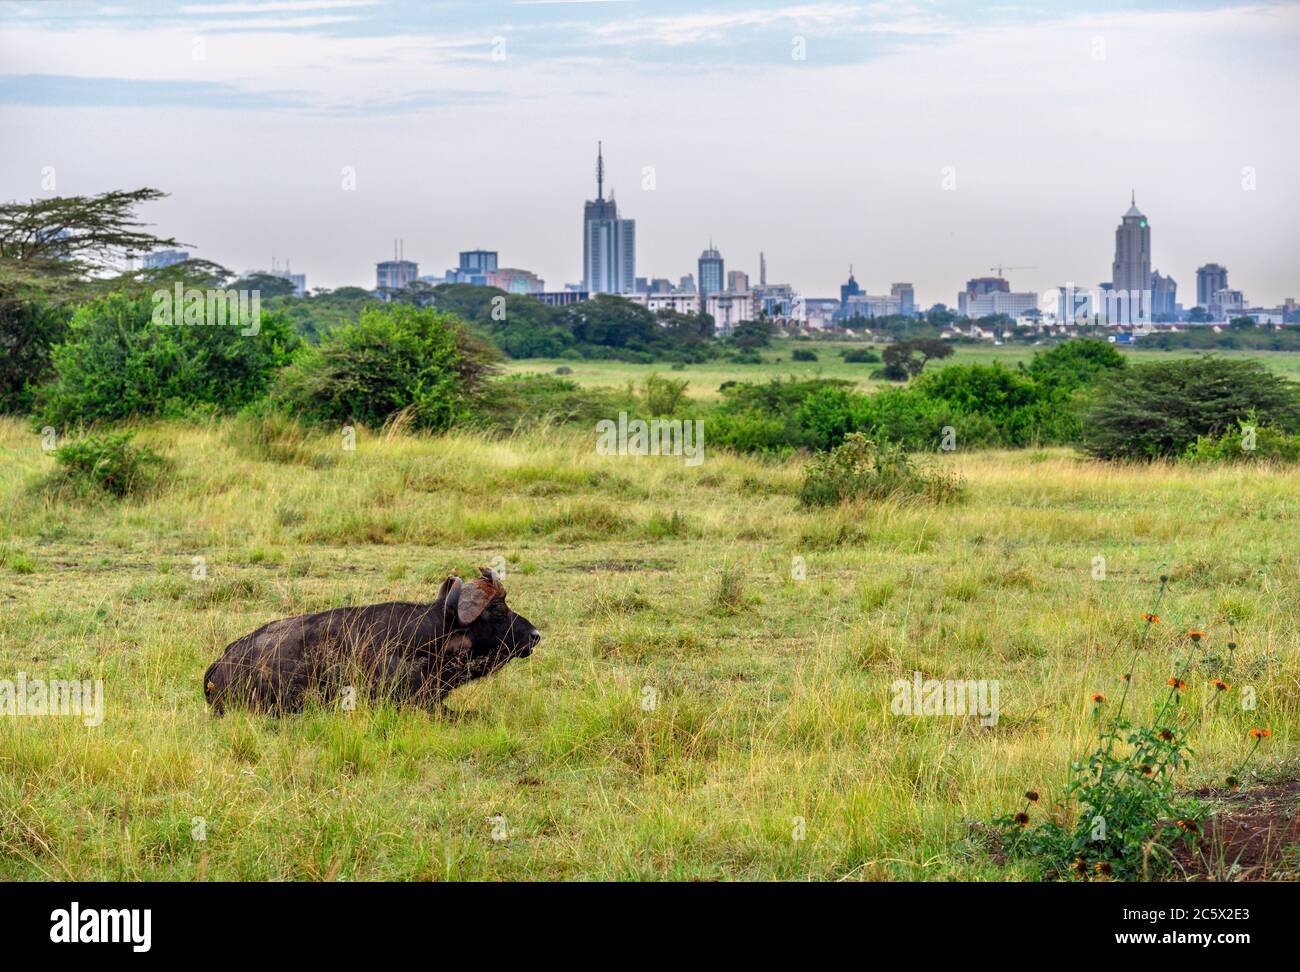 African Buffalo oder Cape Buffalo (Syncerus Caffer) mit der Skyline der Stadt dahinter, Nairobi National Park, Kenia, Ostafrika Stockfoto